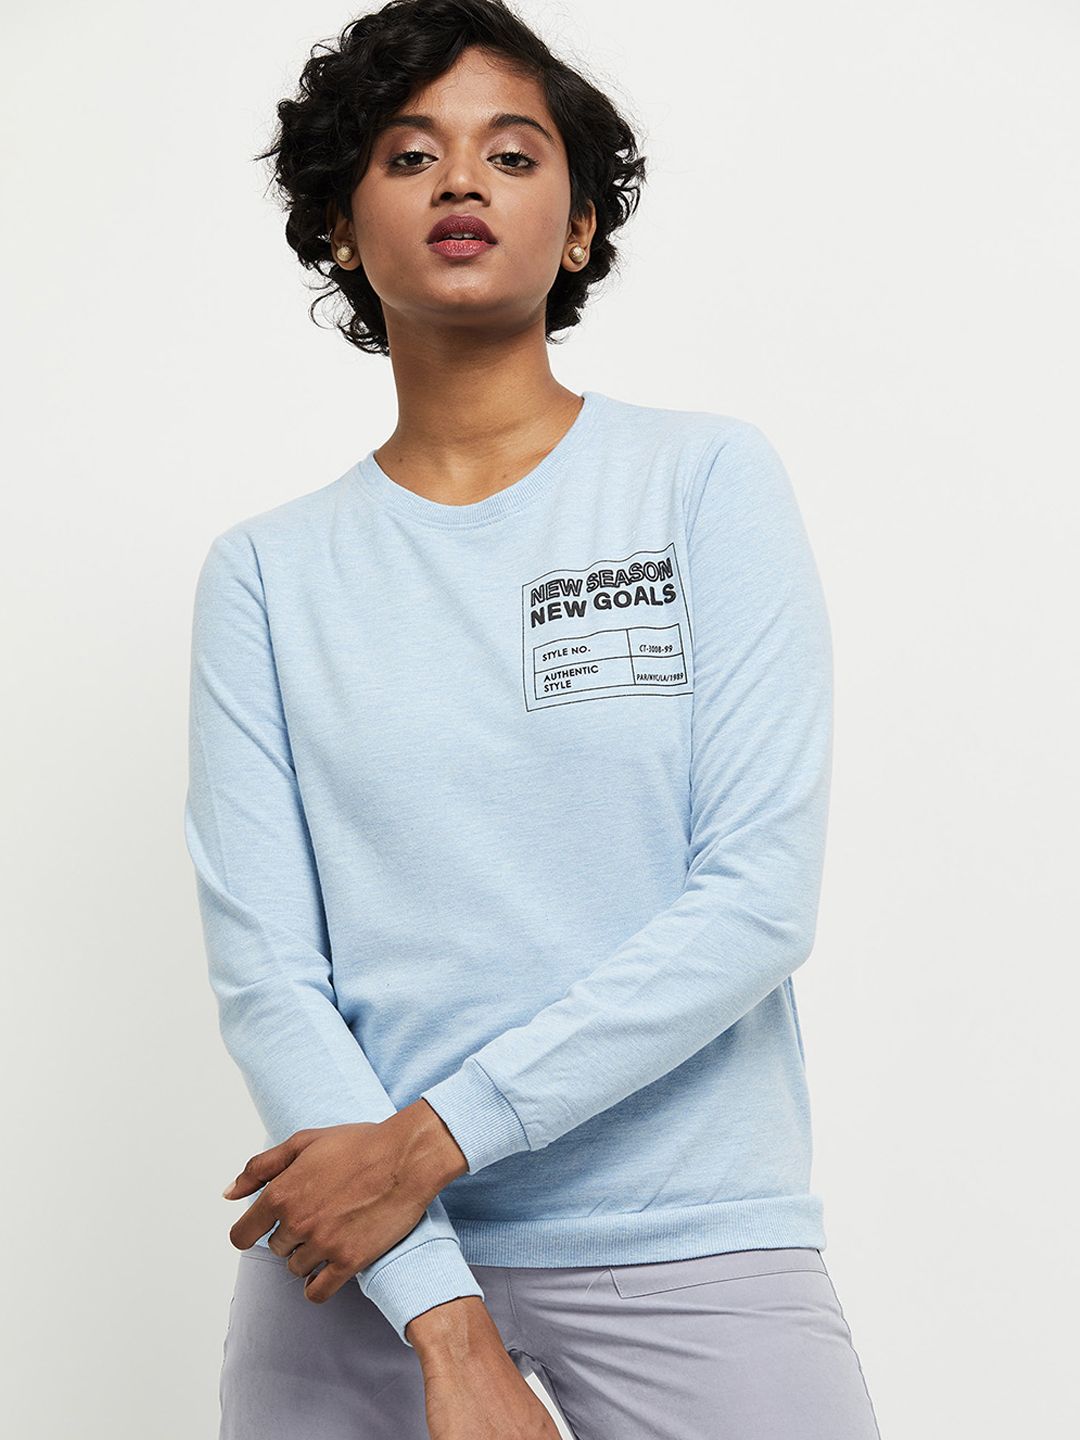 max Women Blue Printed Sweatshirt Price in India